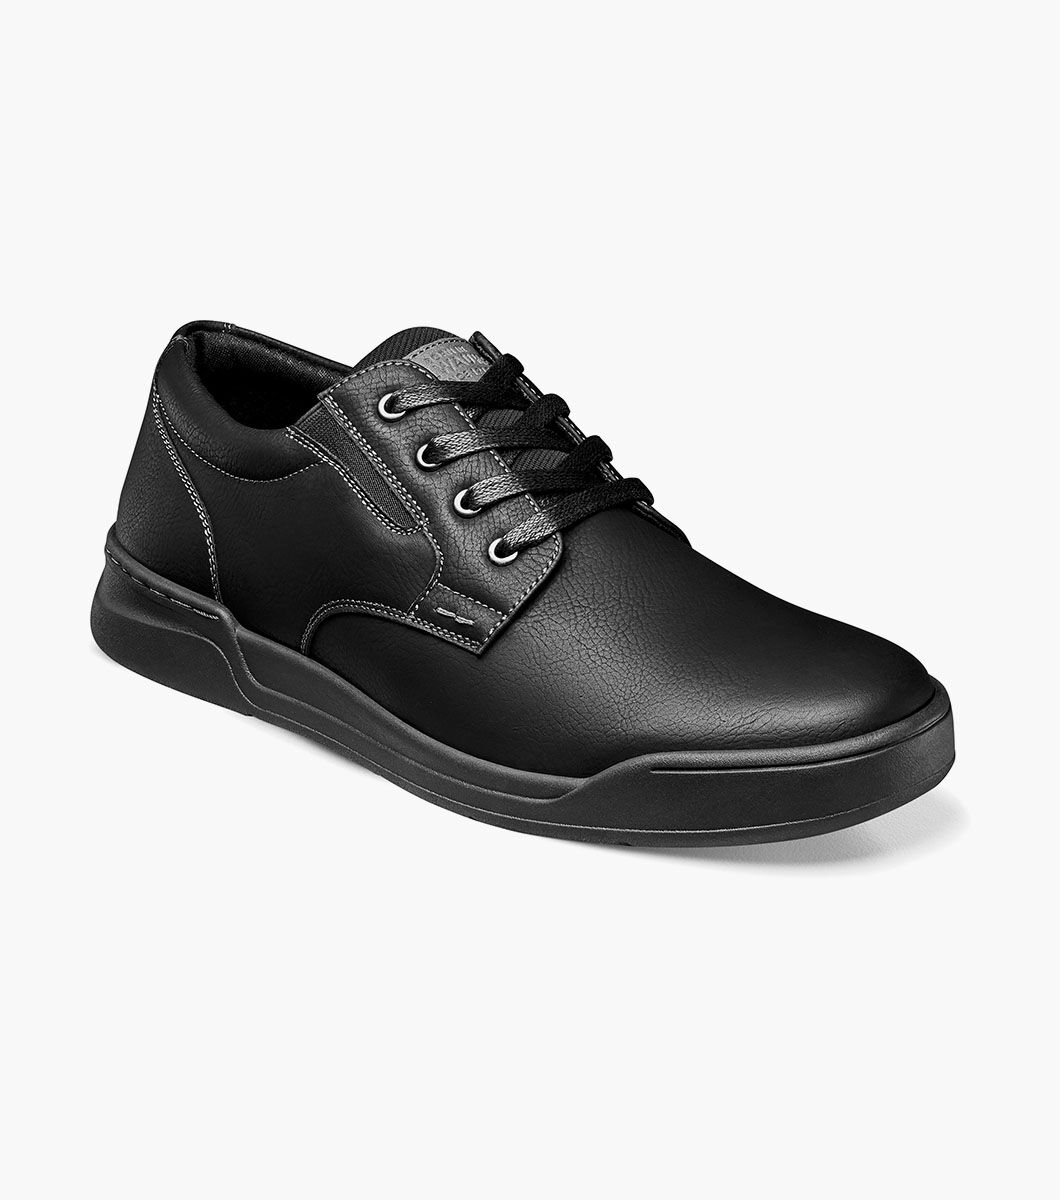 Nunn Bush Shoes Tour Work Plain Toe Oxford Black Smooth Size 10.5